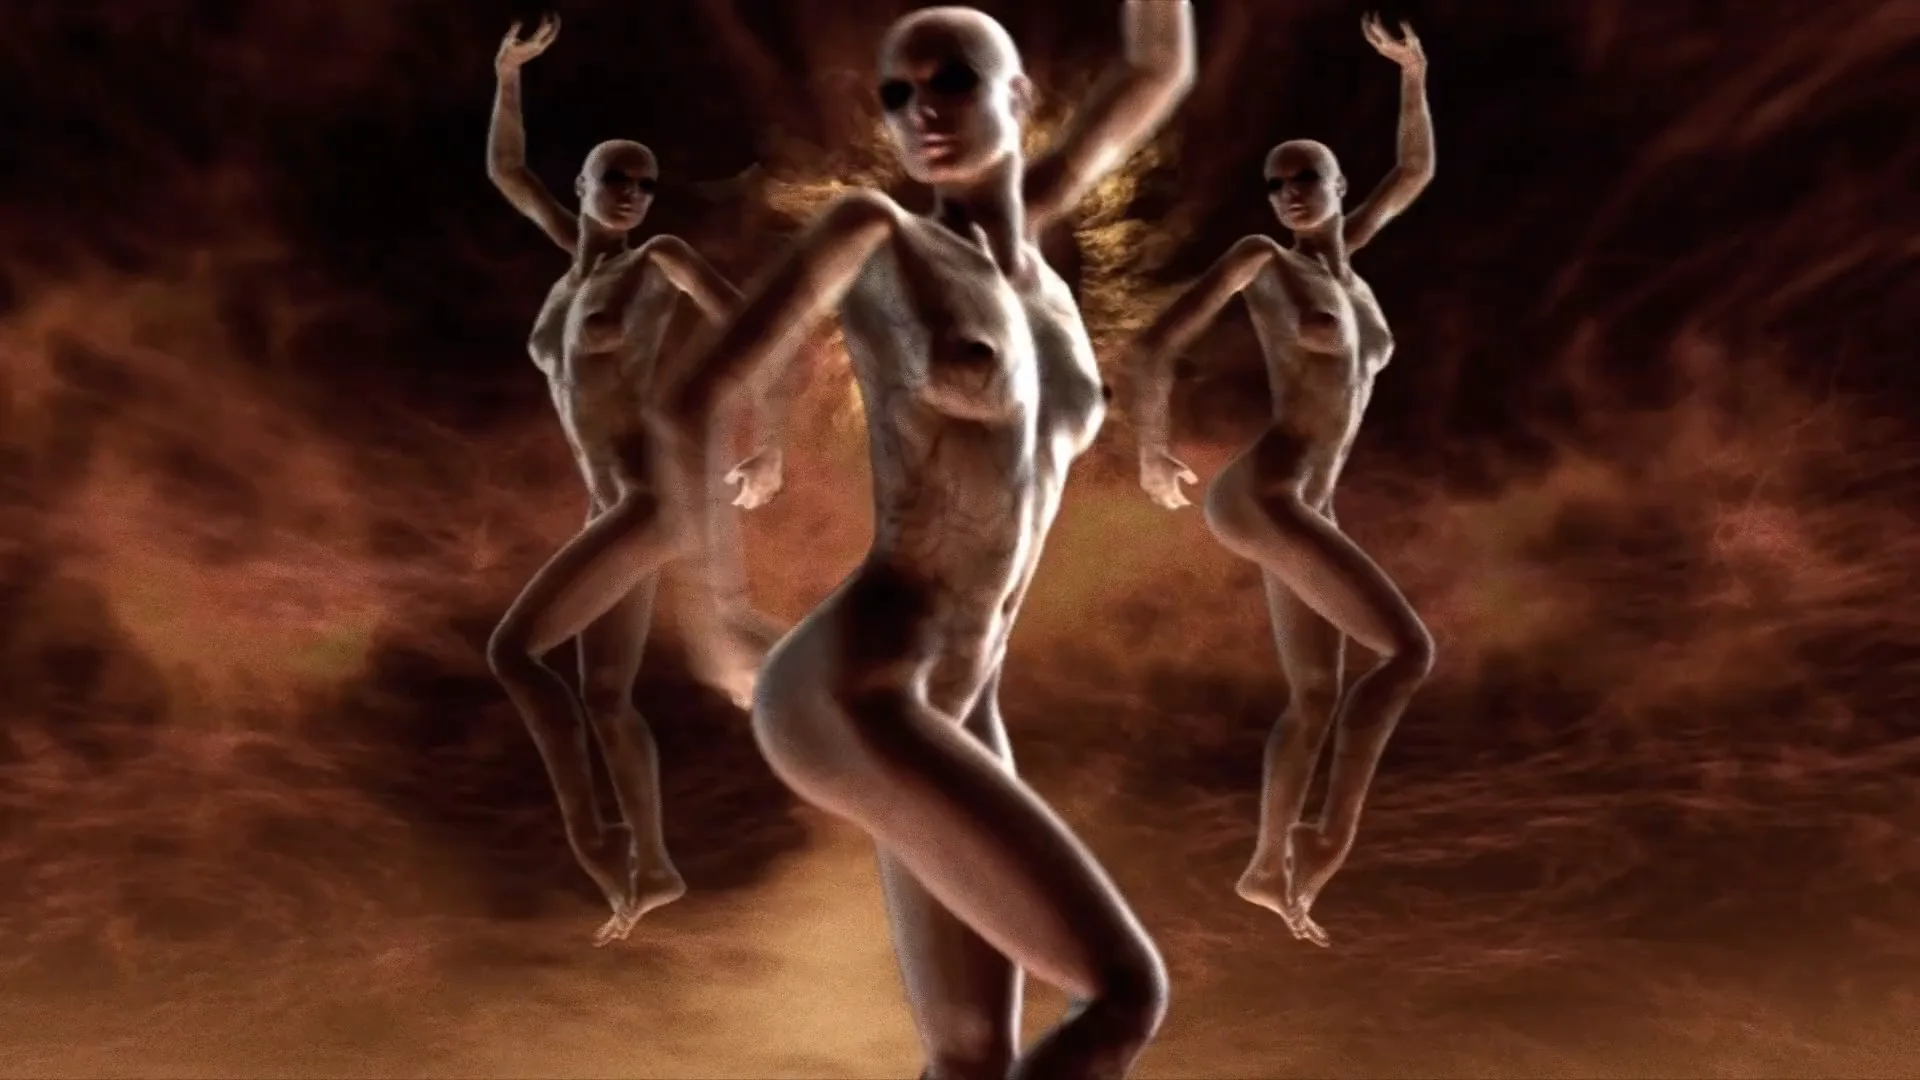 anne verdin recommends naked girls dancing vimeo pic